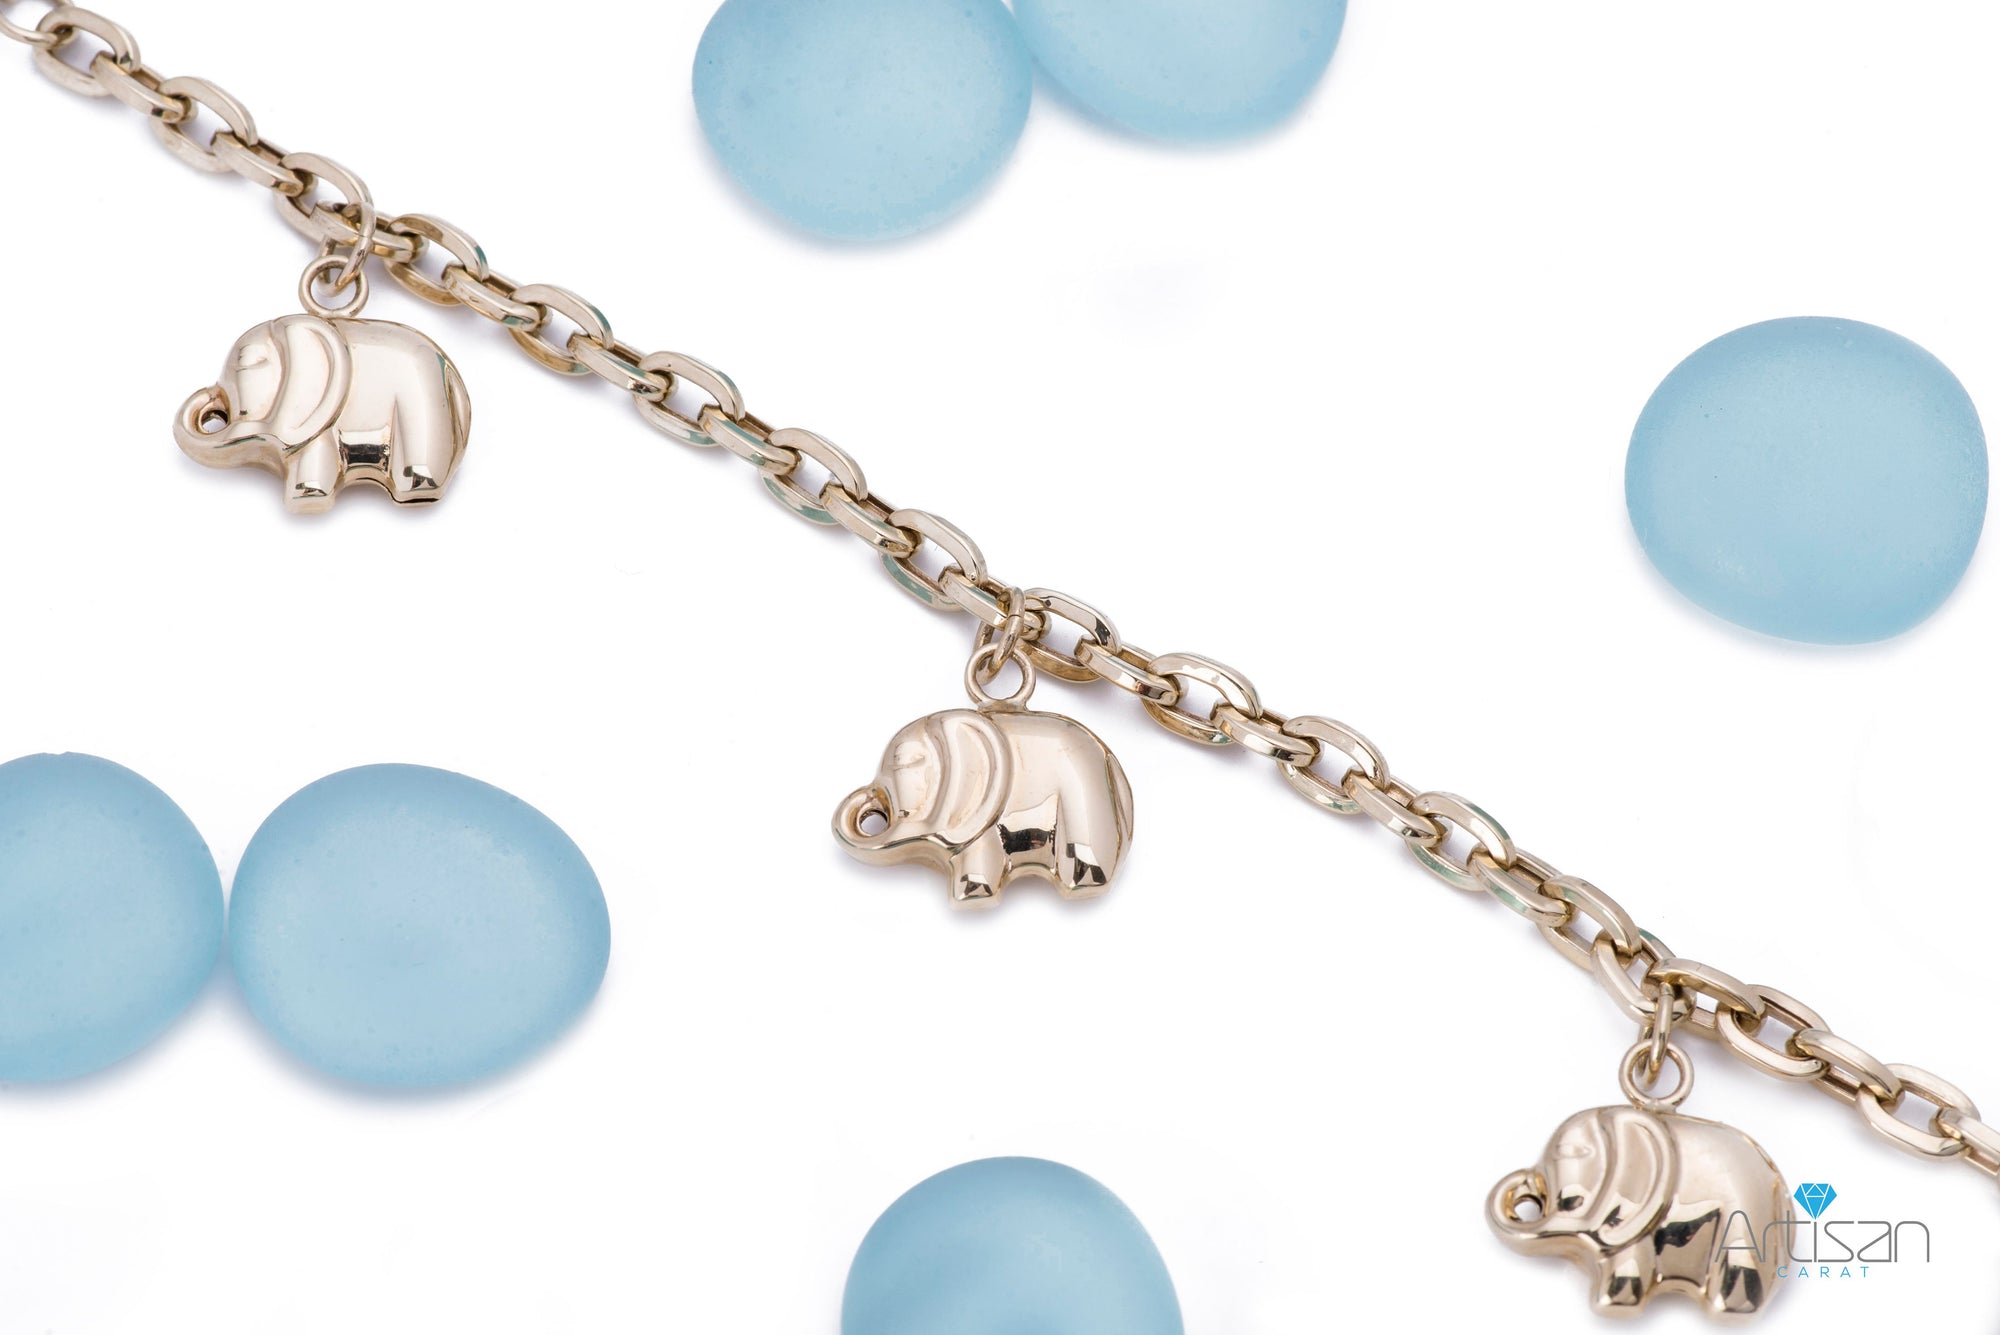 Buy Annie Haak Santeenie Gold Charm Bracelet - Elephant Online